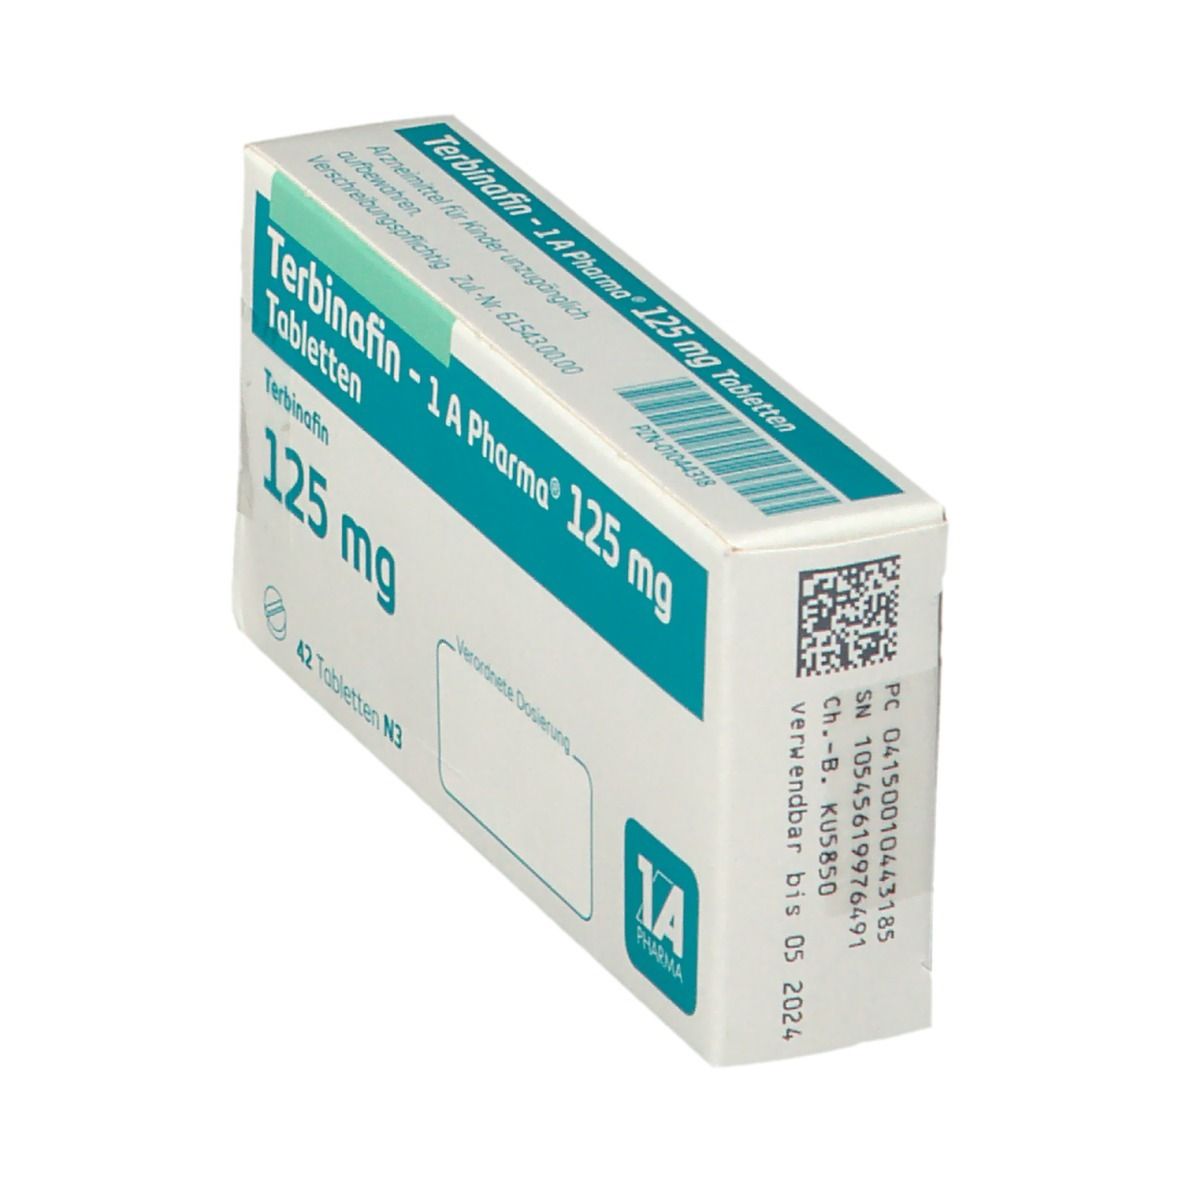 Terbinafin 1A Pharma® 125Mg